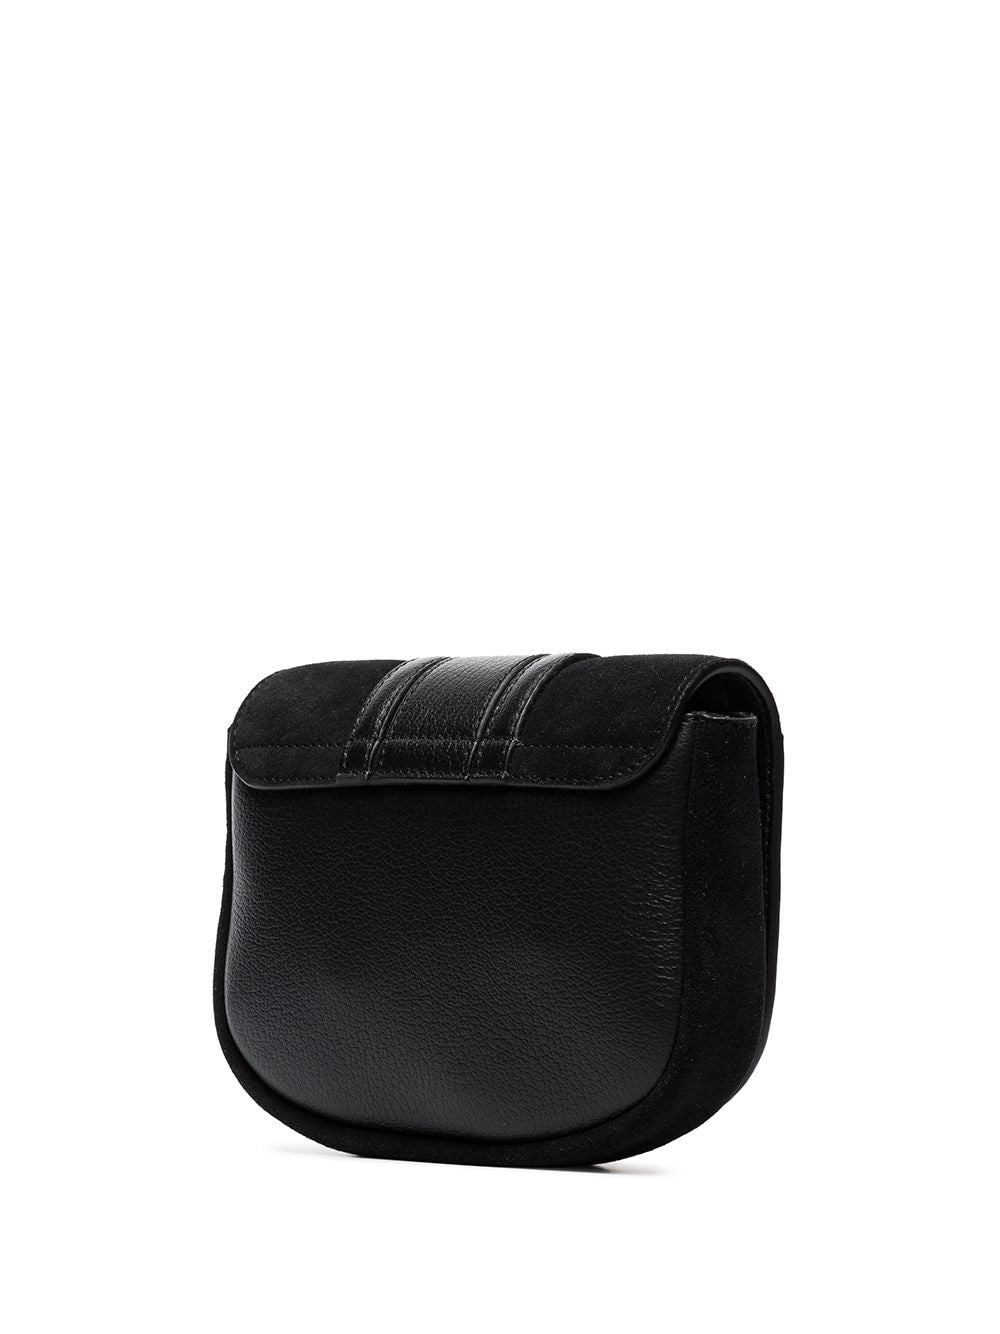 Black leather/calf leather mini Hana bag